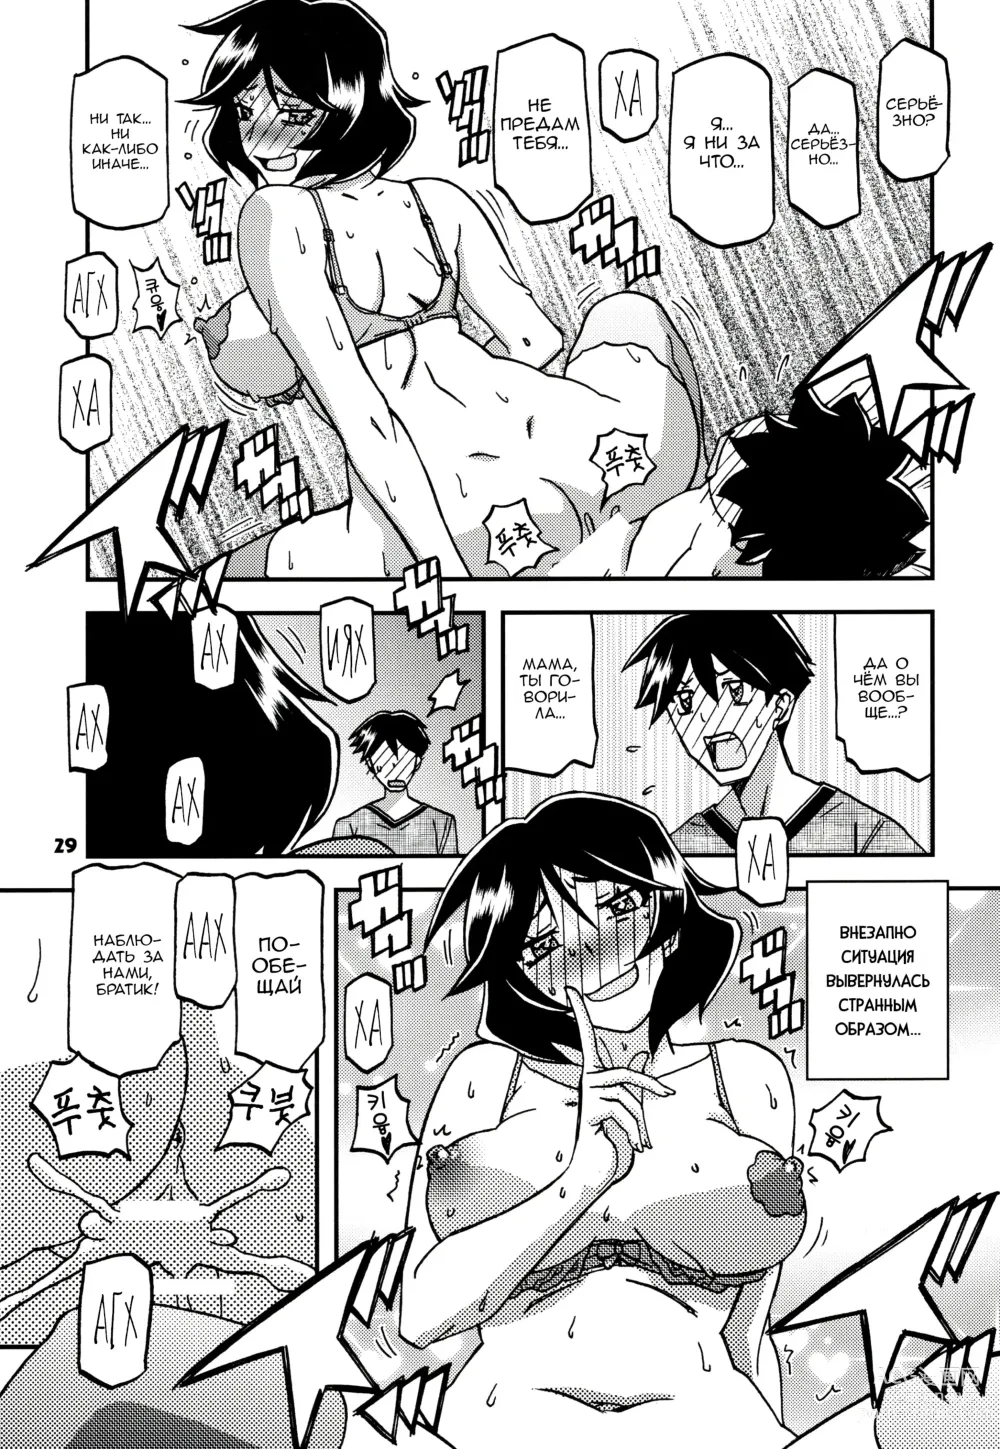 Page 28 of doujinshi Akebi no Mi - Fumiko CONTINUATION